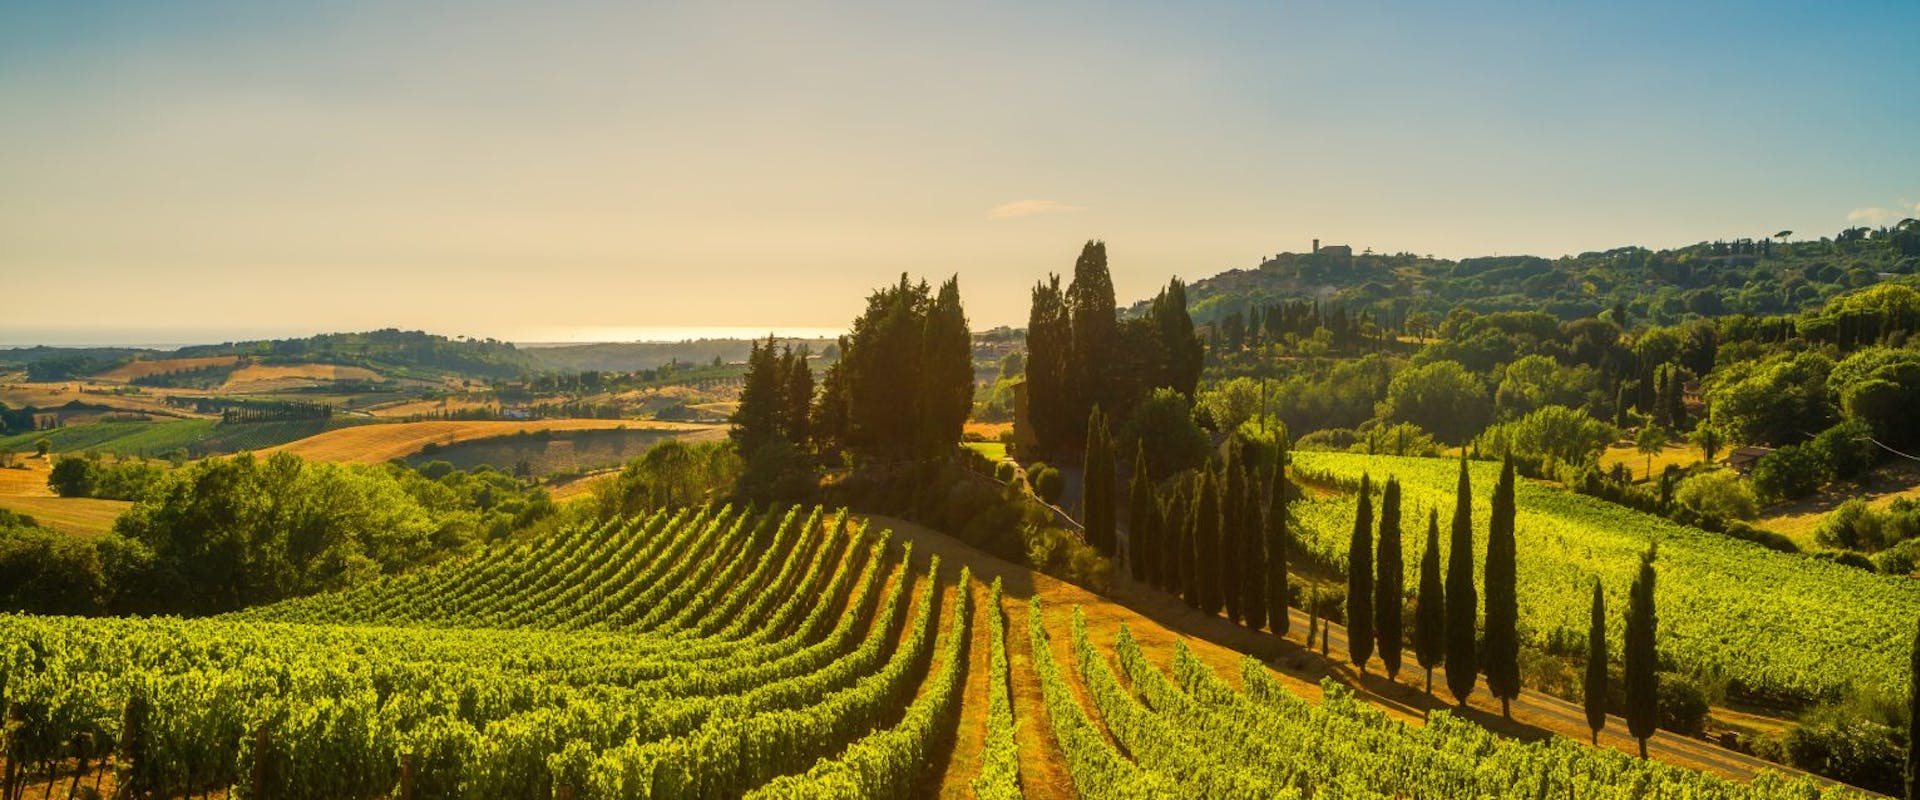 A vineyard scene with grape vines.